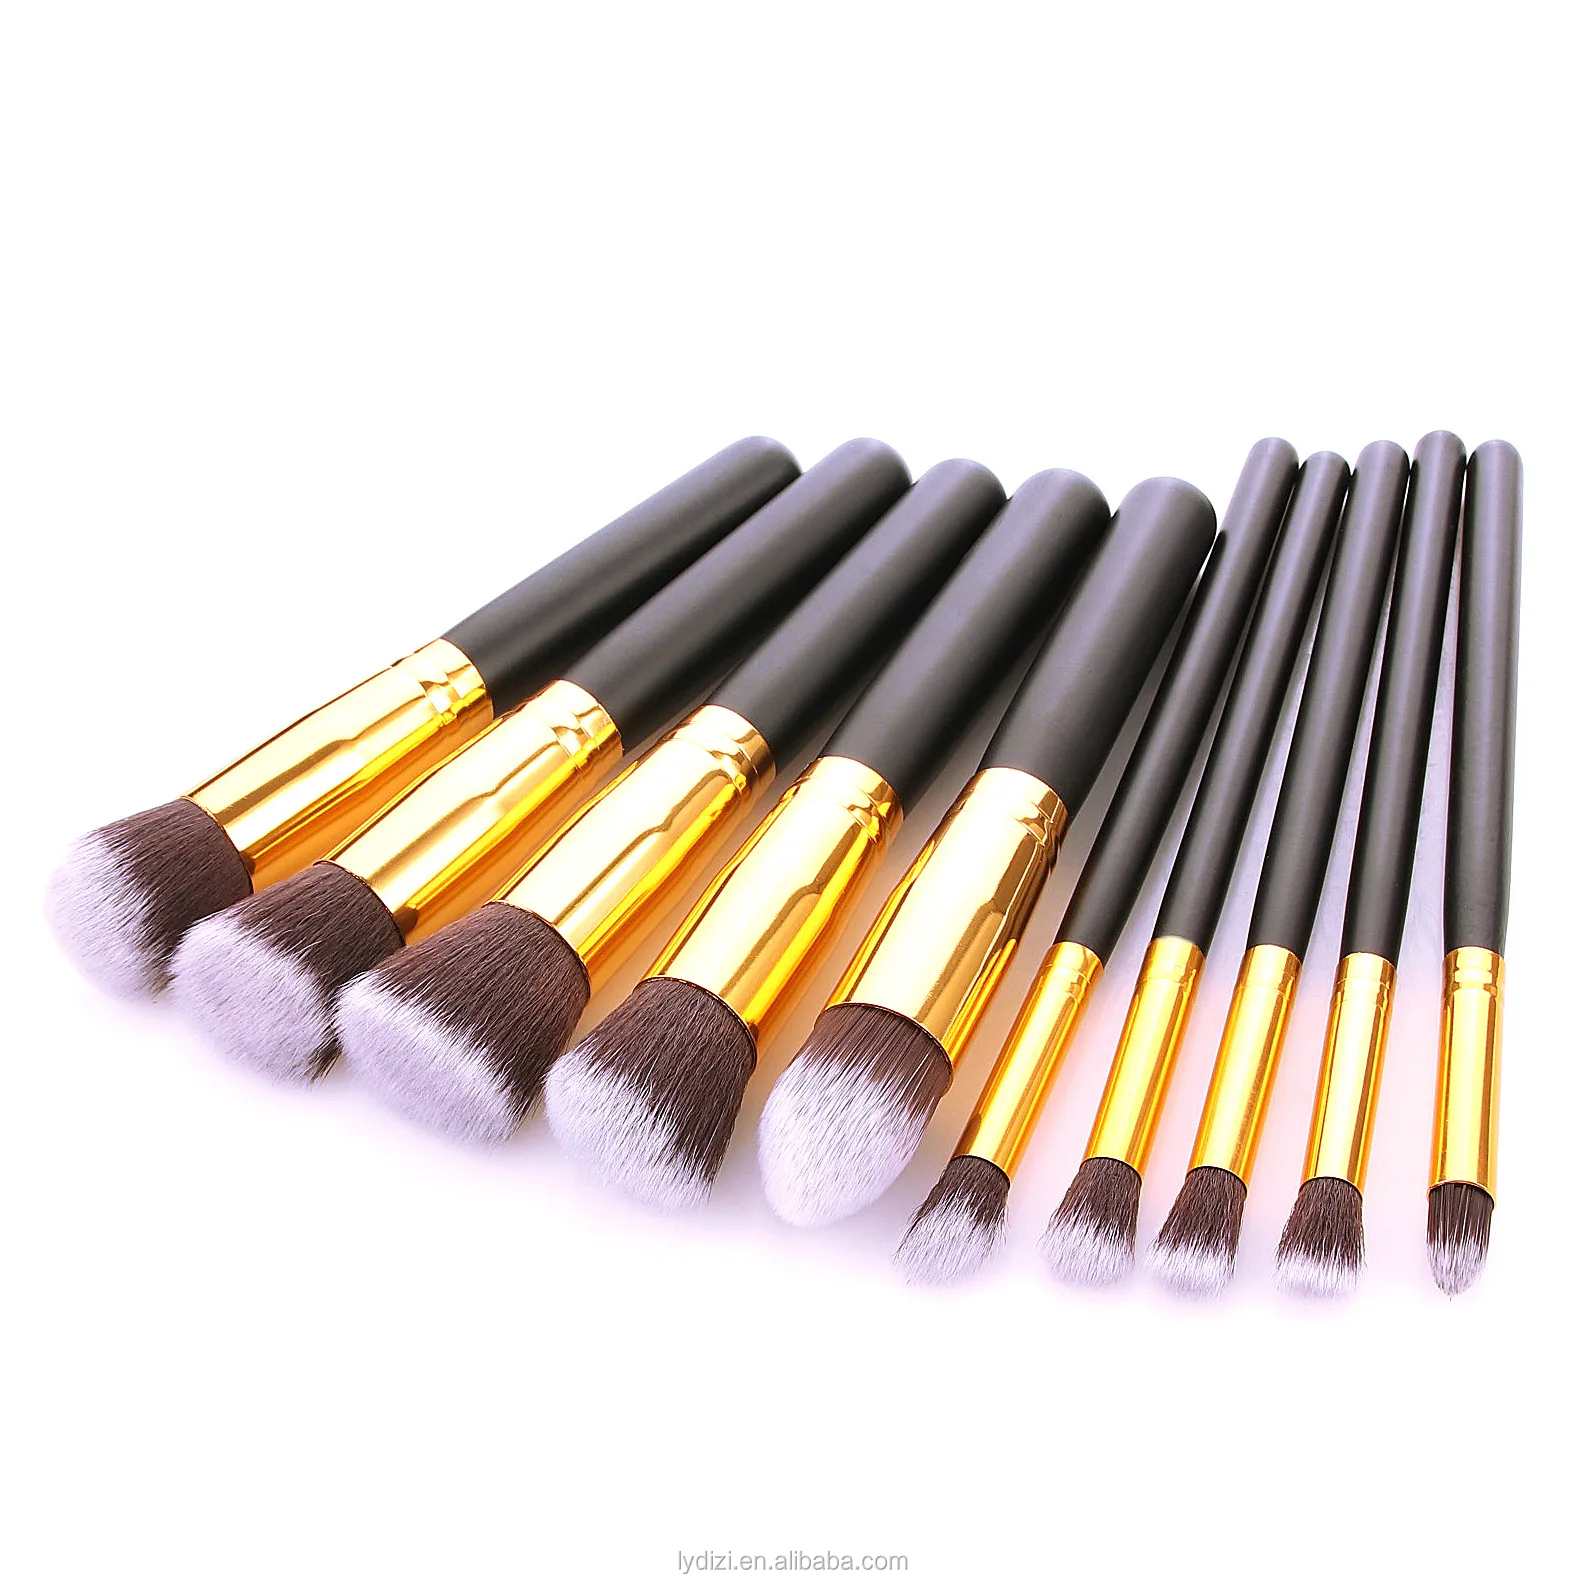 

New Arrive 10 pcs Synthetic Kabuki Makeup Brush Set Cosmetics Foundation blending blush makeup tool